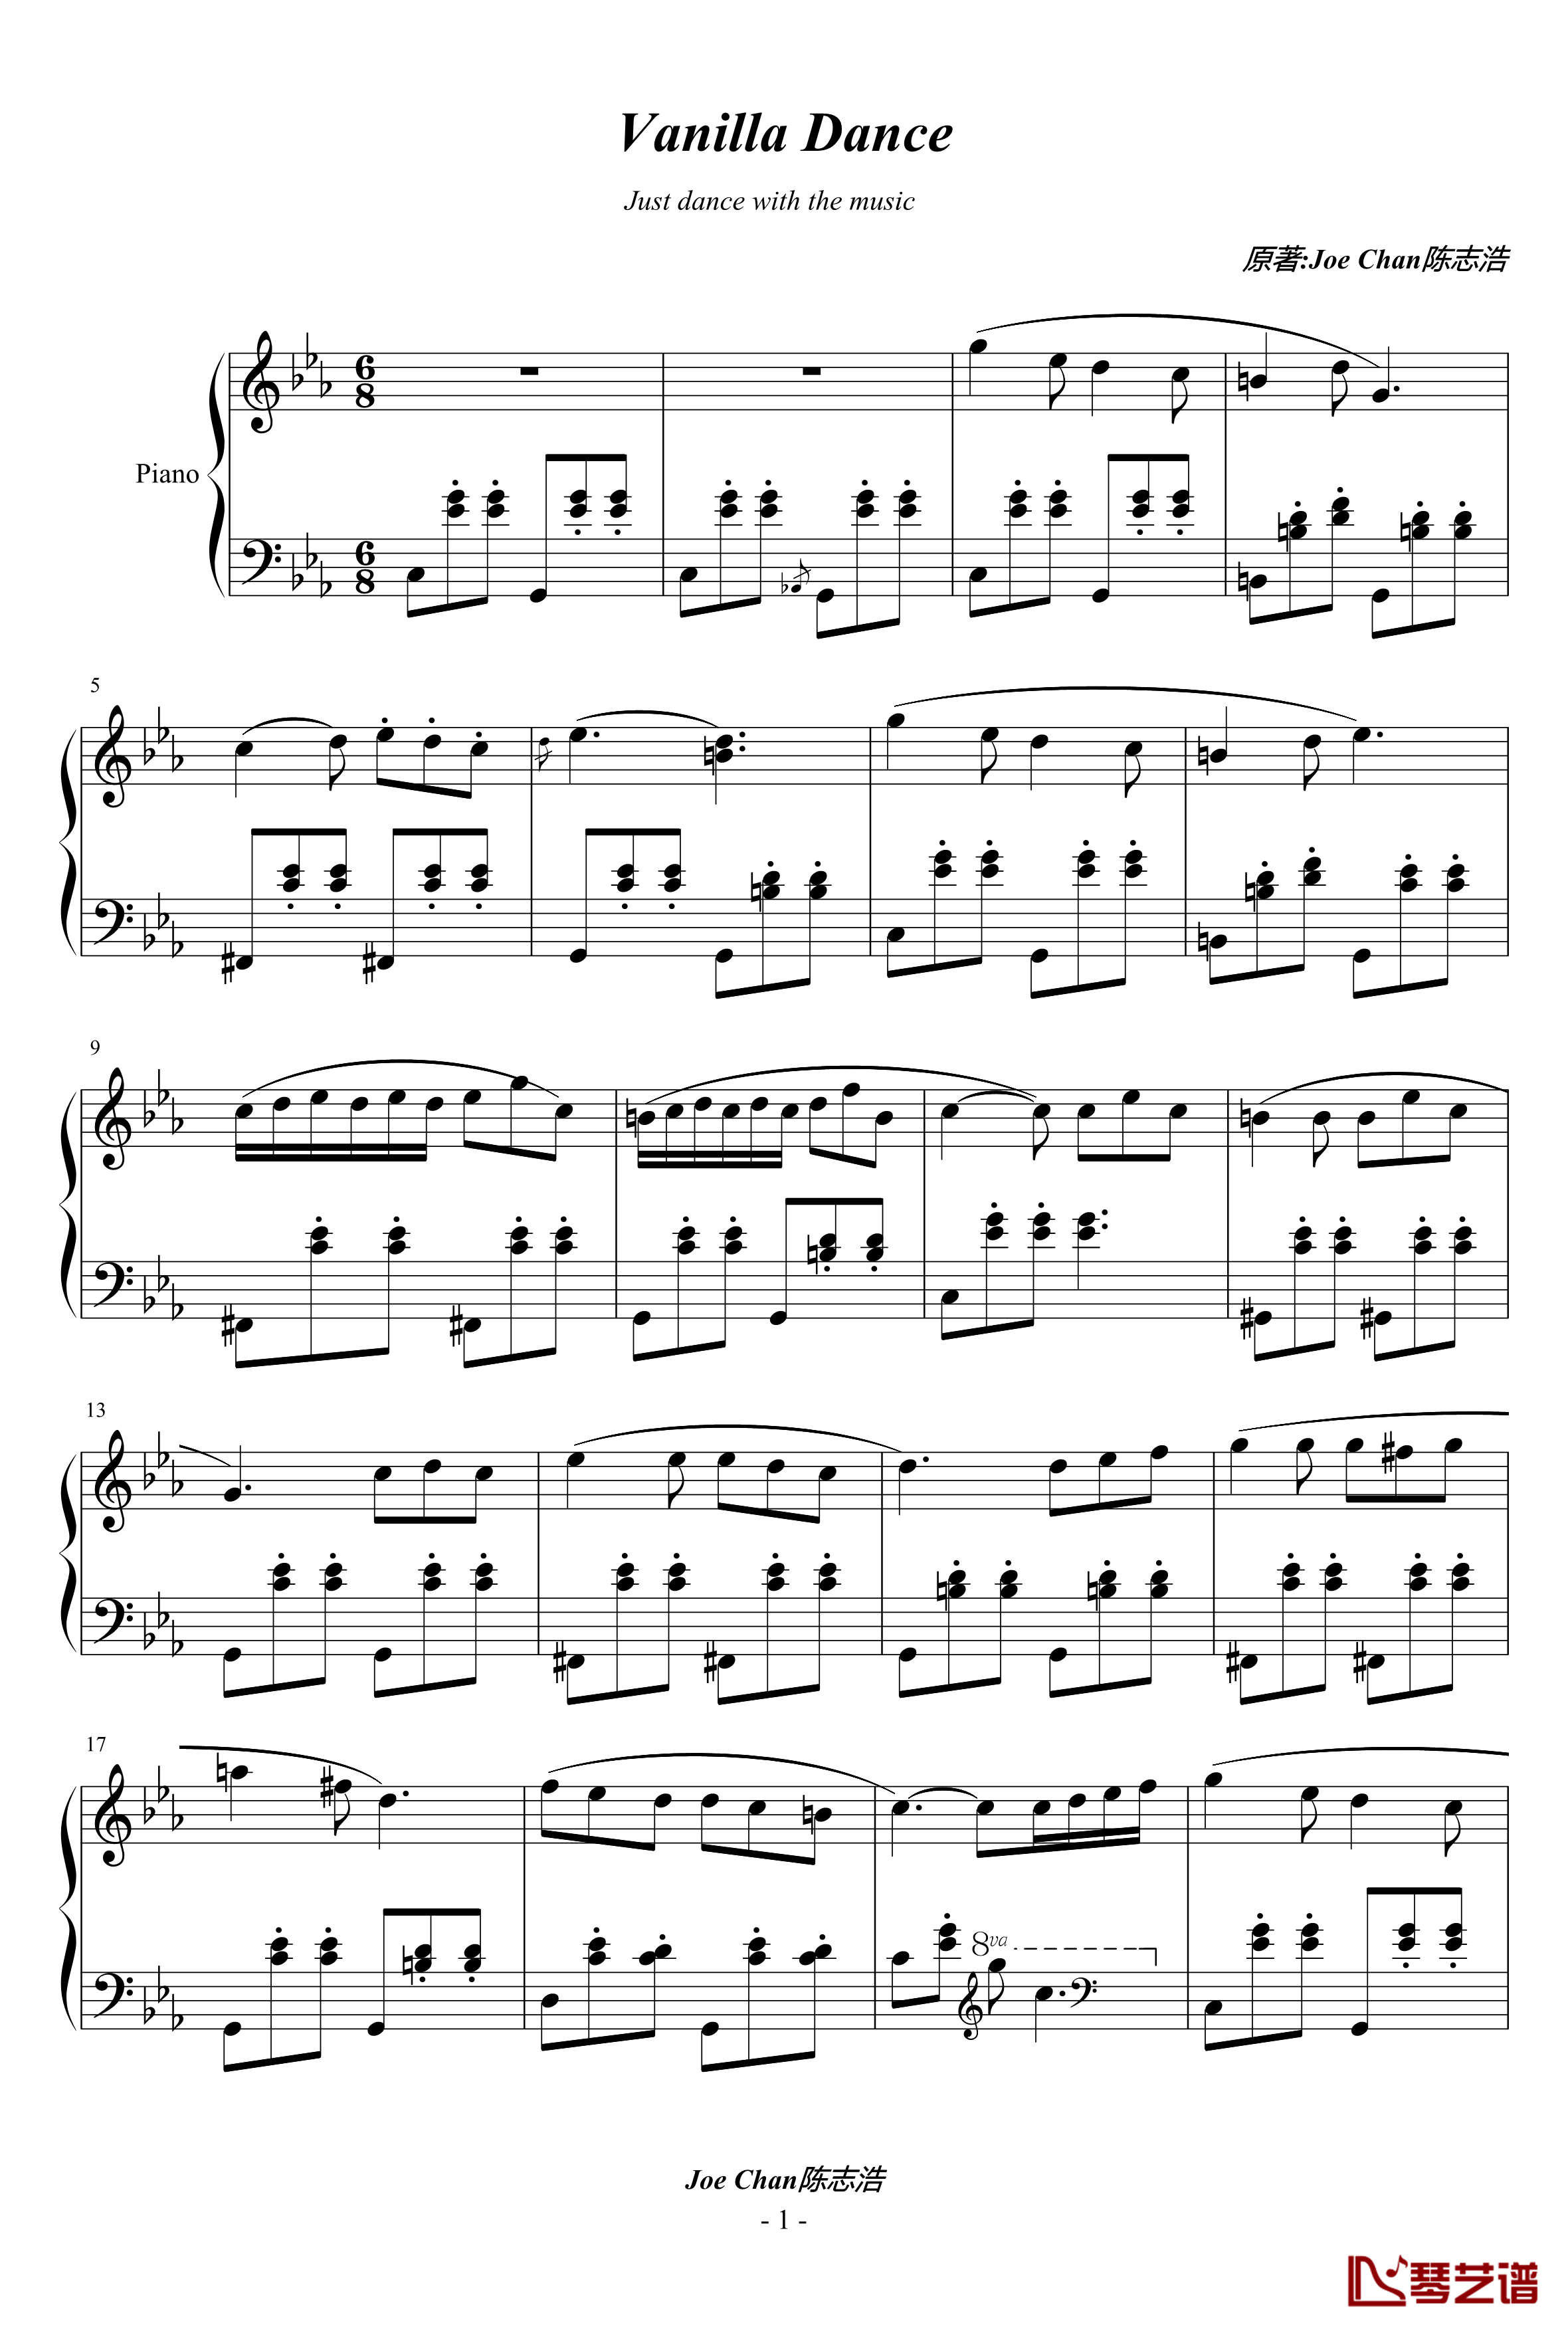 Vanilla Dance钢琴谱-Mrjoeconan1